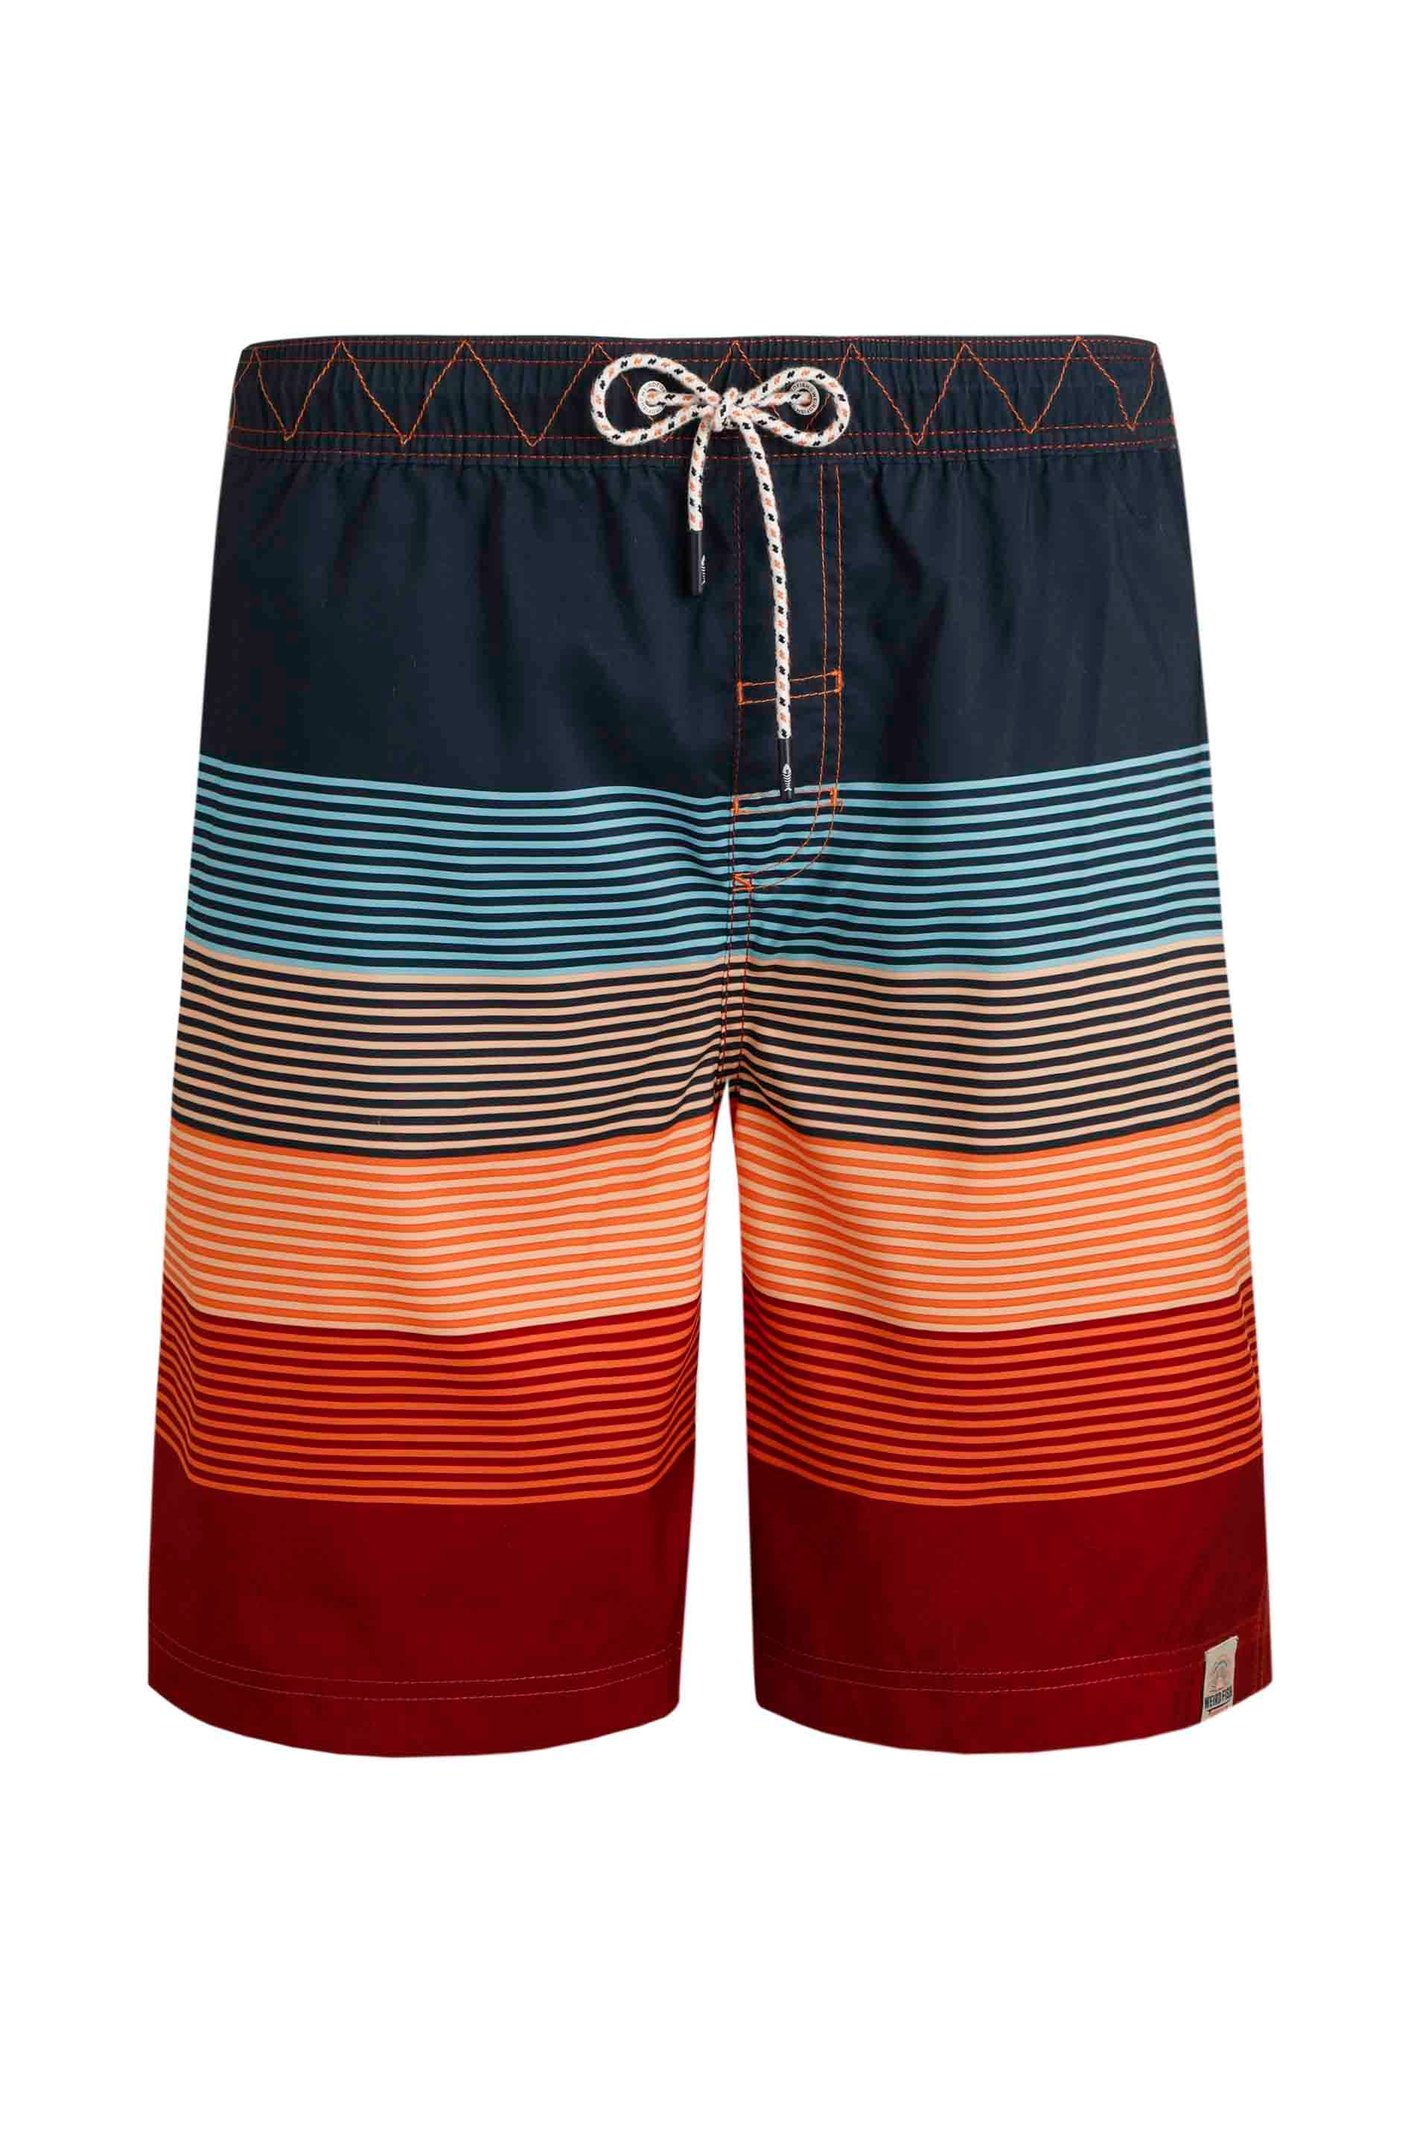 Weird Fish Lucknow Striped Board Shorts Mango Size 40